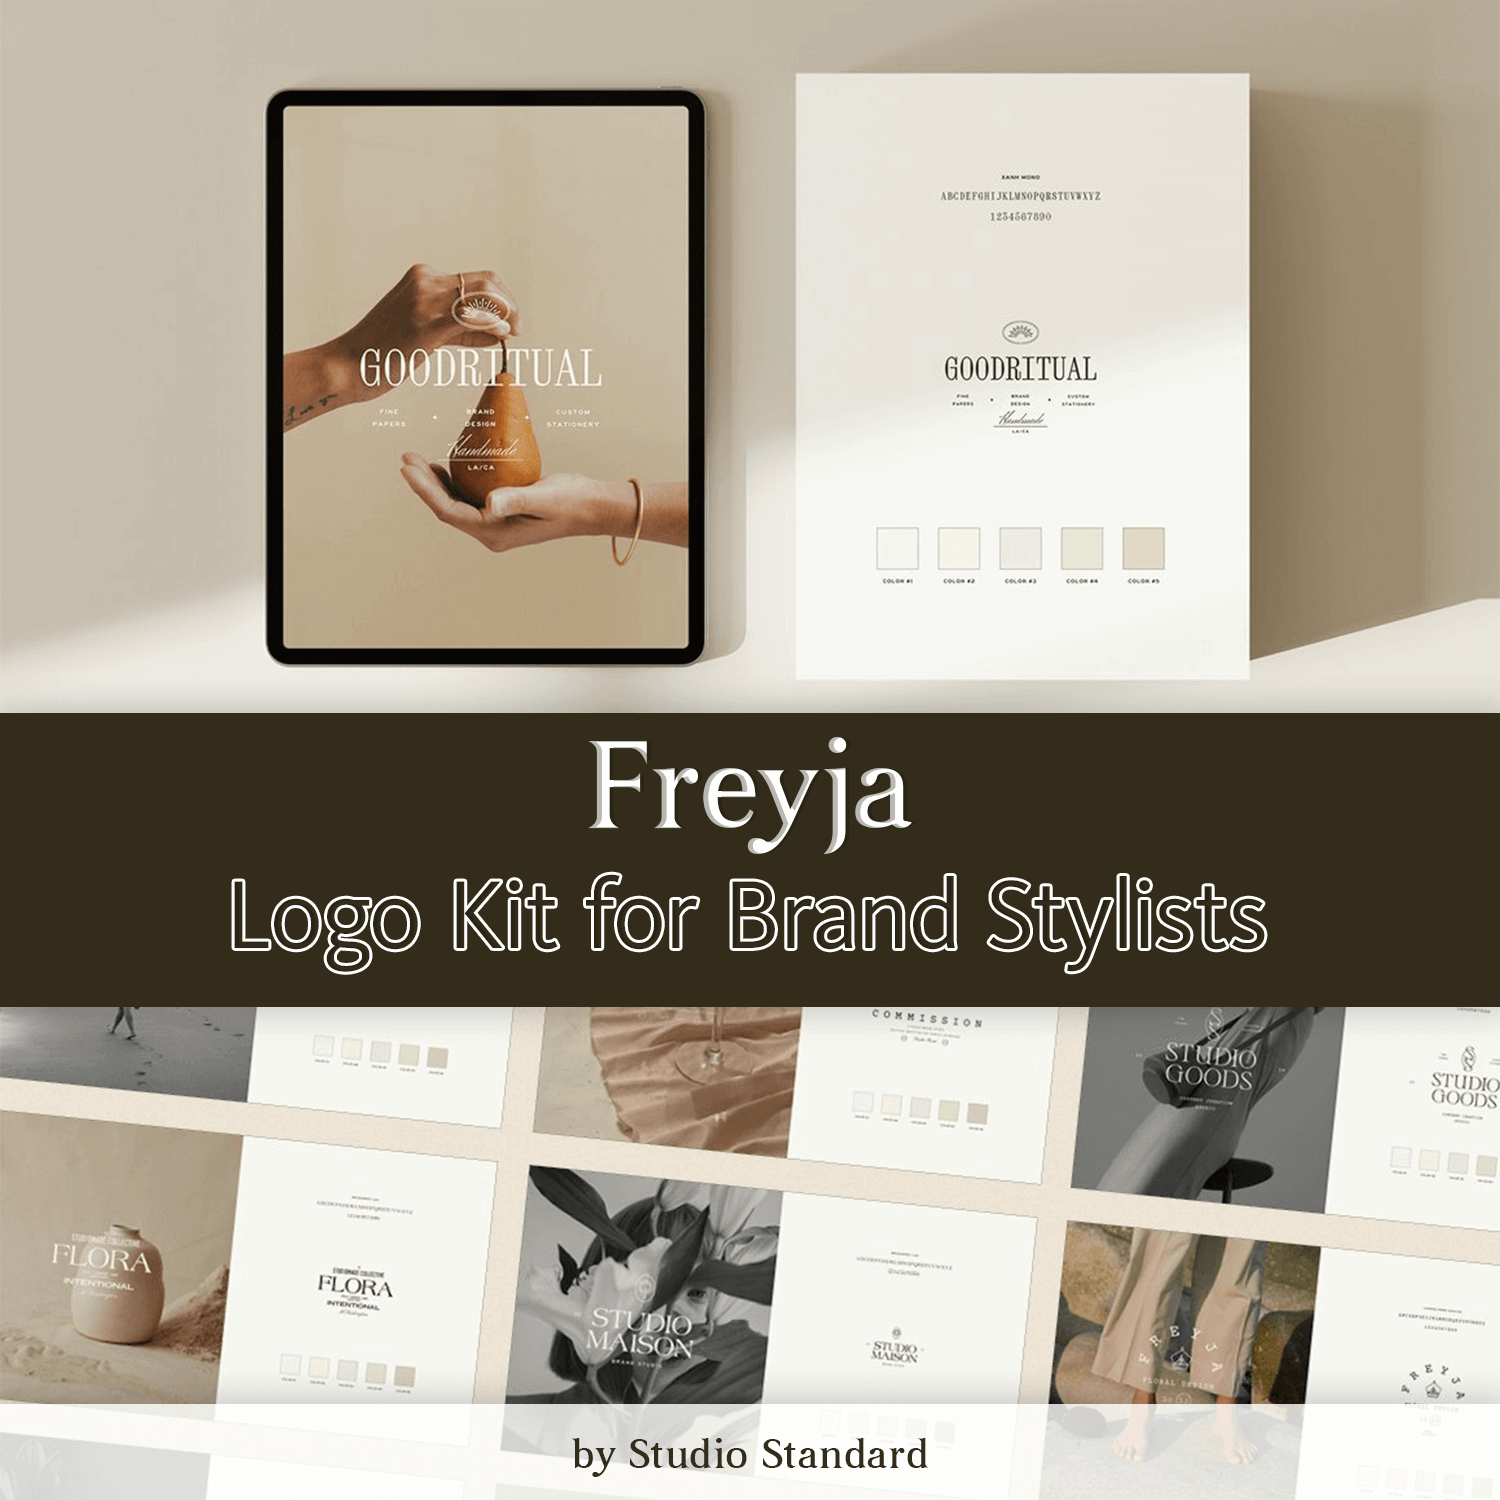 Freyja Logo Kit for Brand Stylists on a tablet.